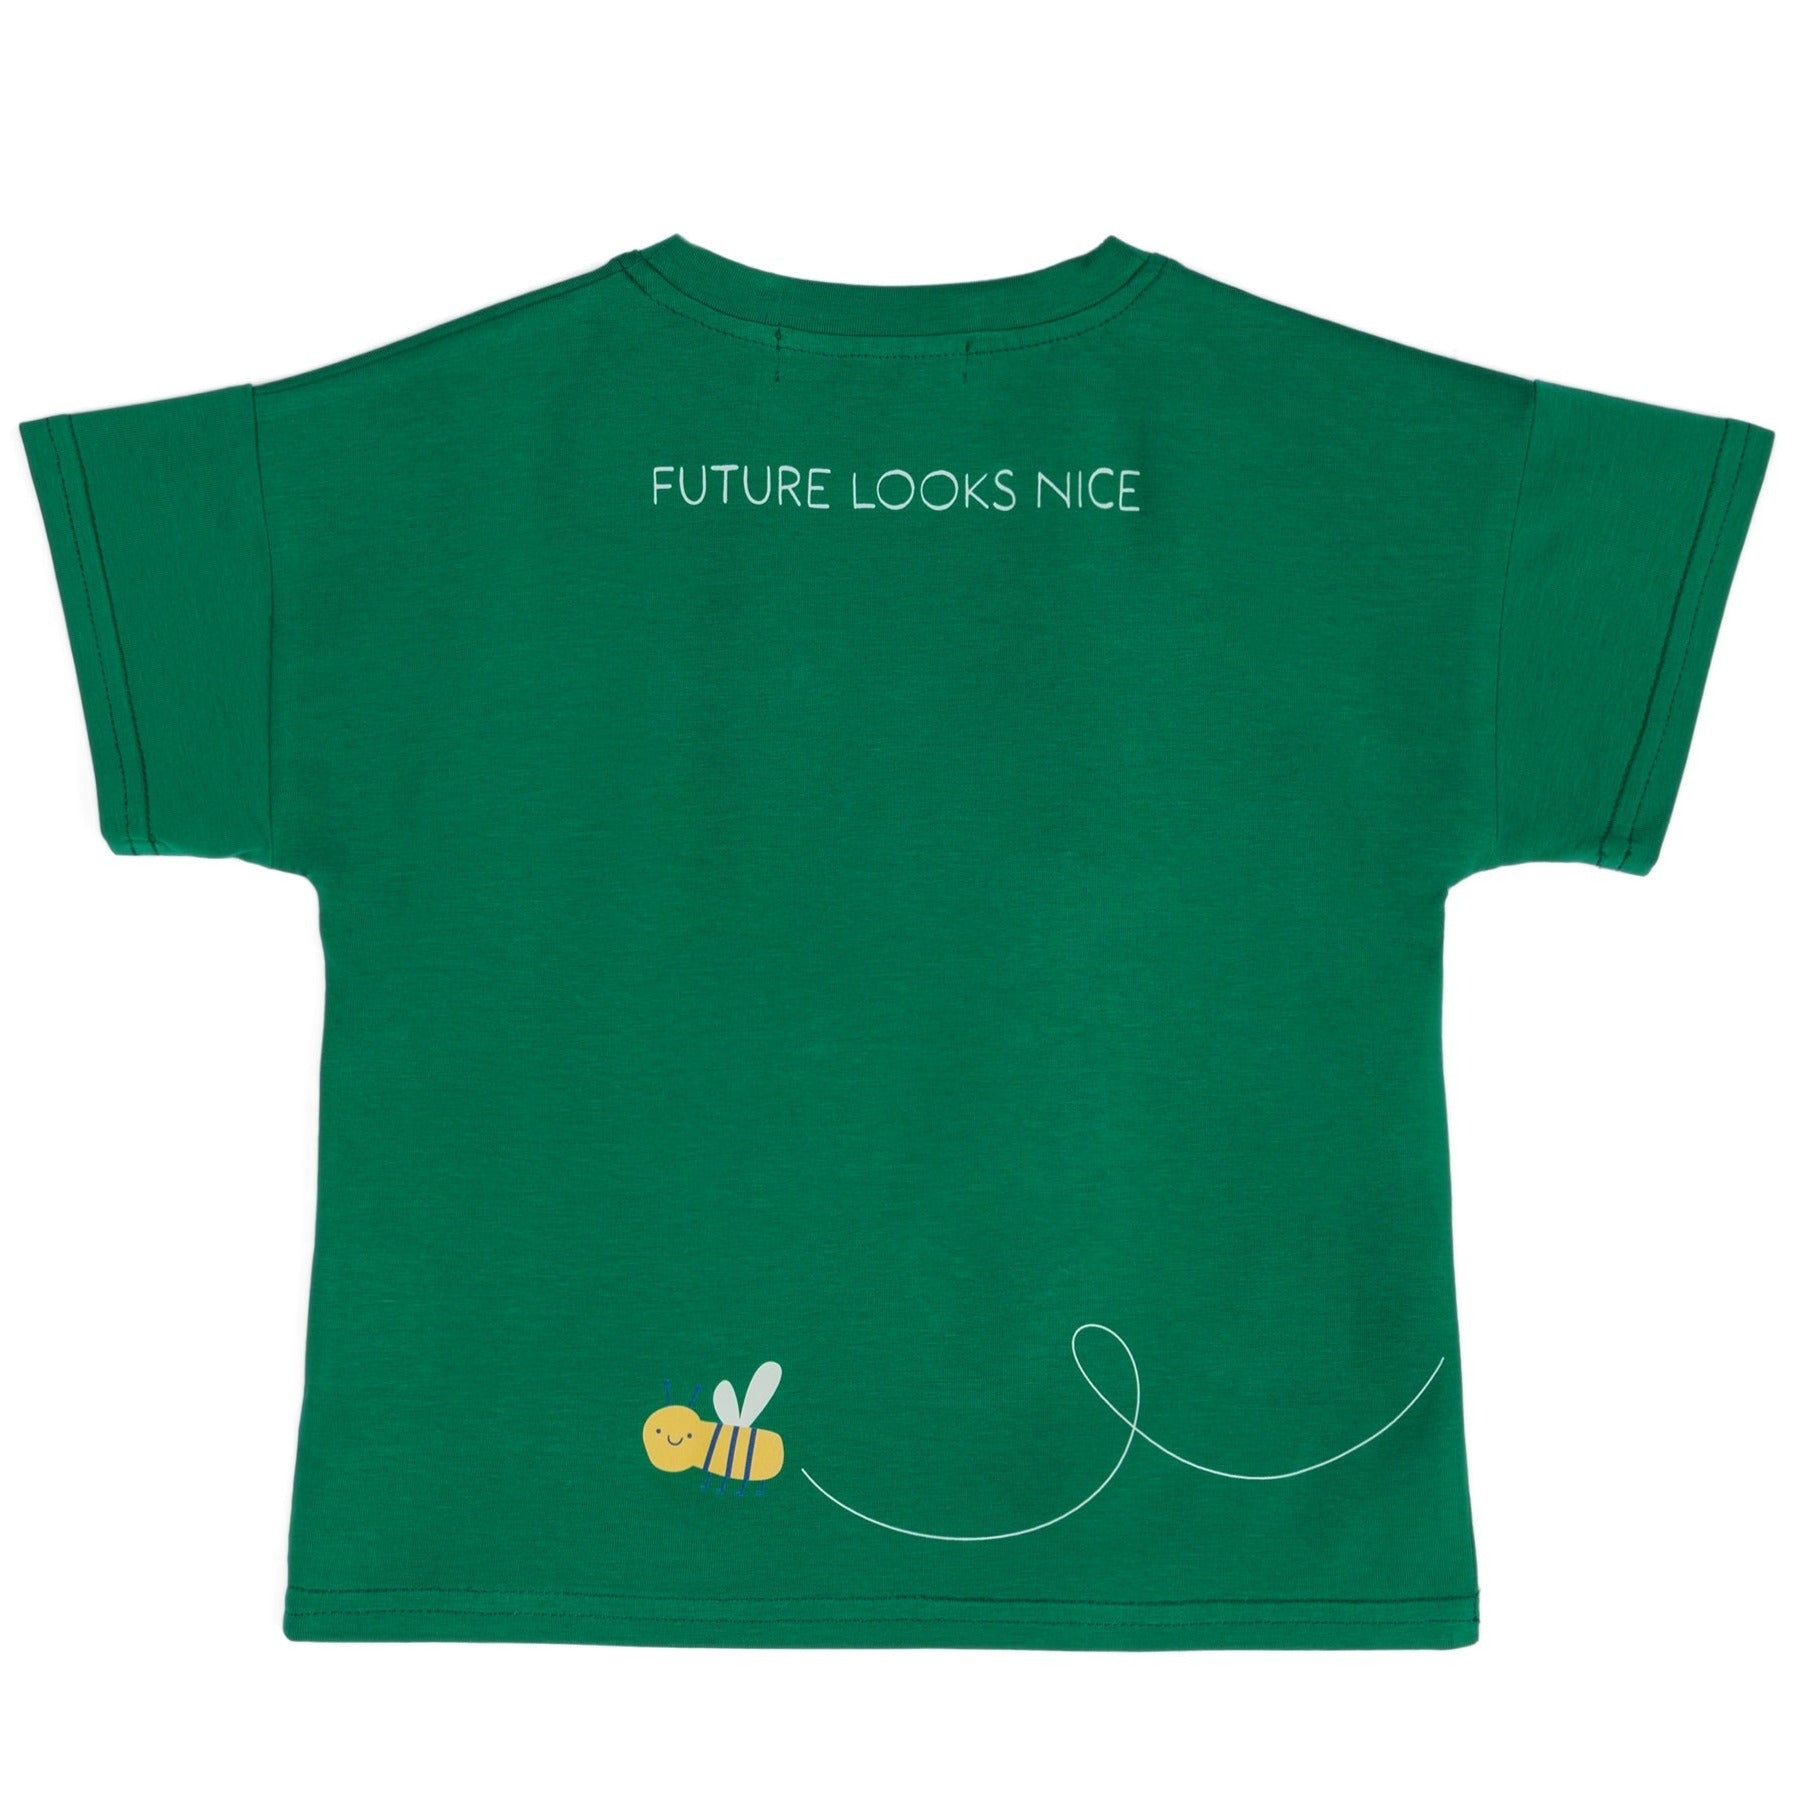 Kid Story: Green organic cotton t-shirt